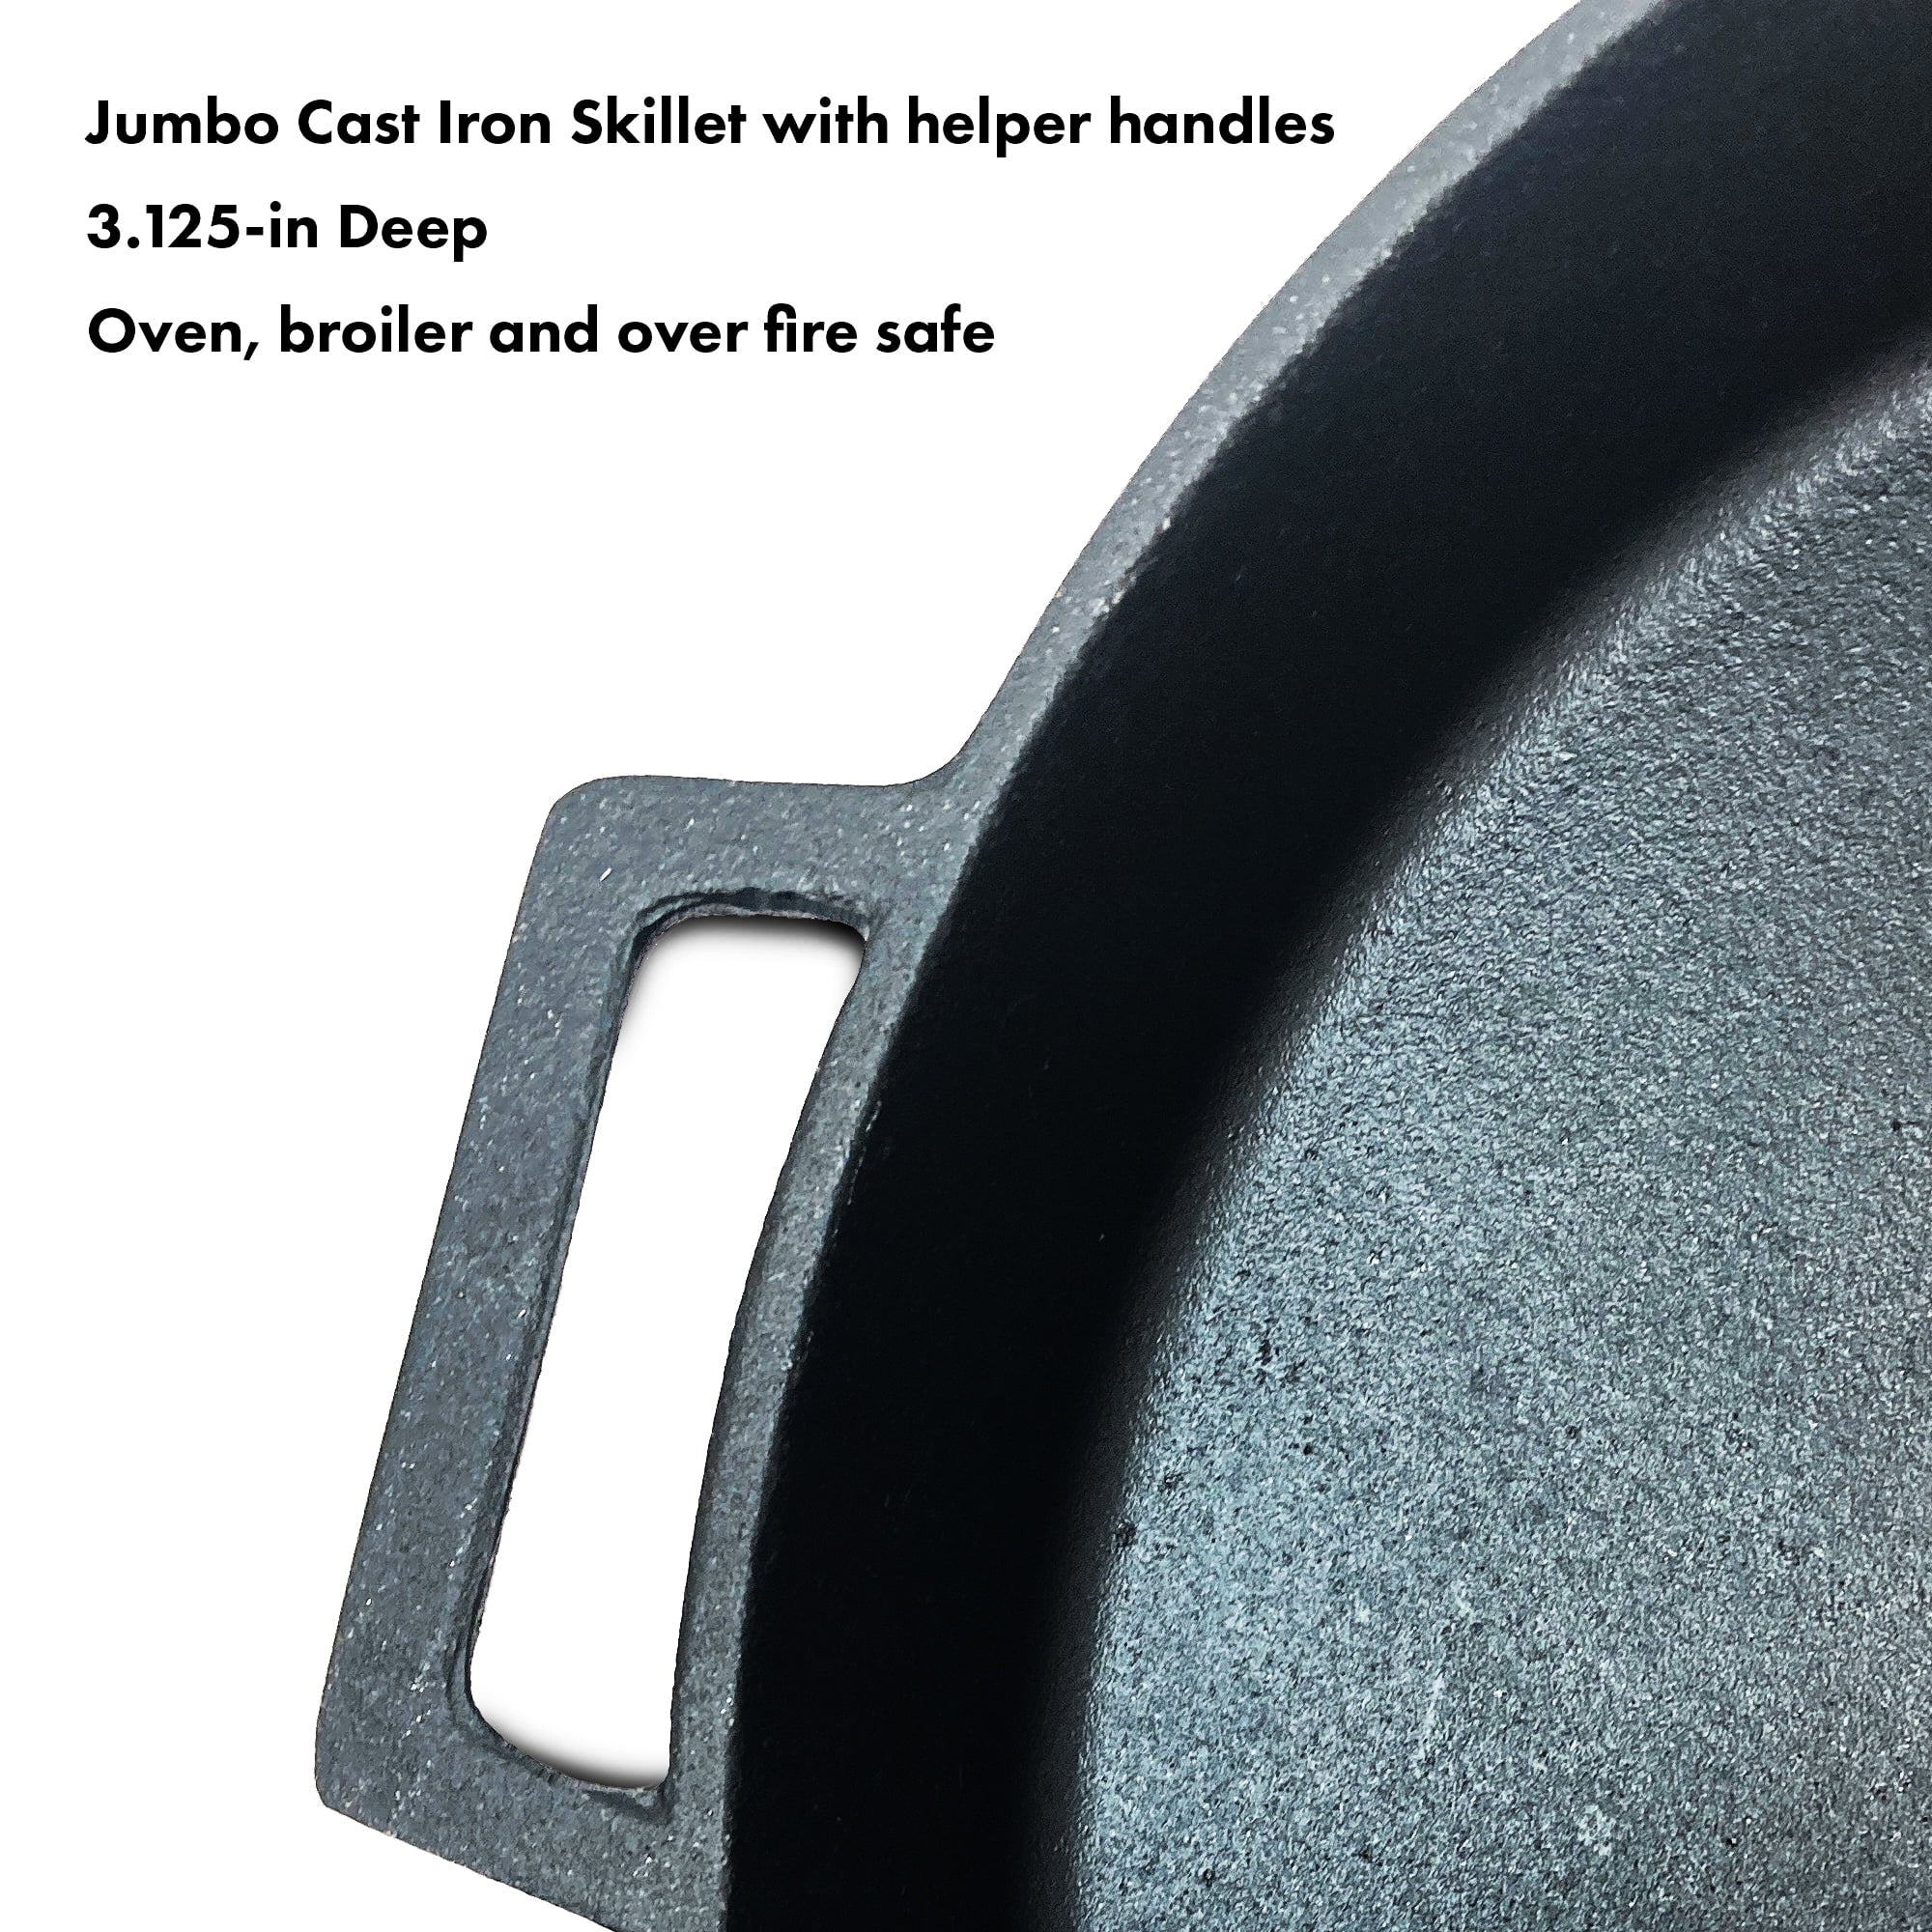 Bayou Classic 20 Inch Jumbo Cast Iron Skillet Features Dual Helper